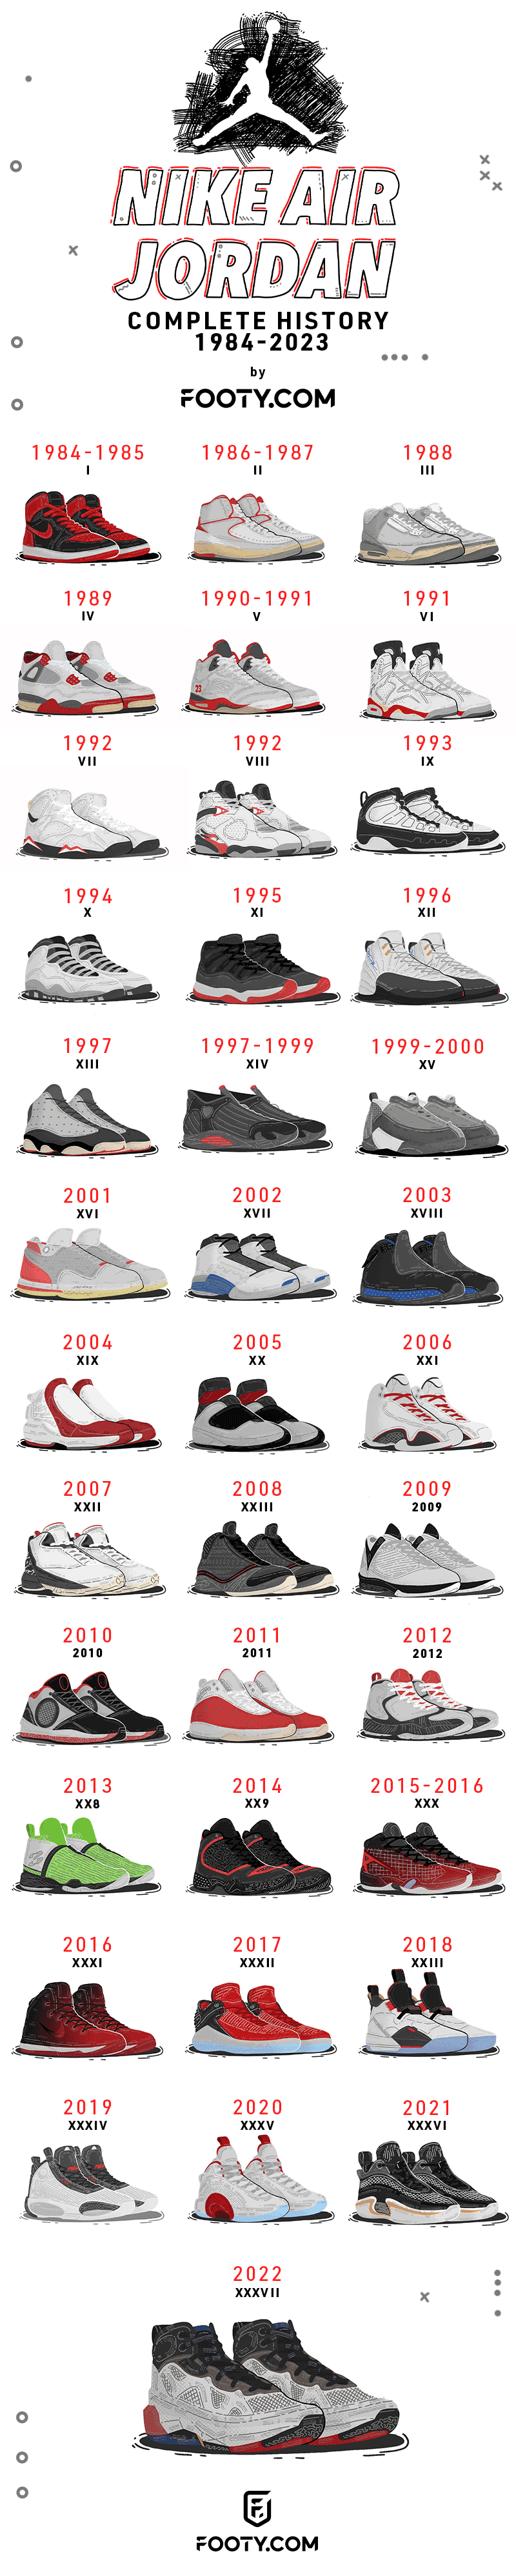 Nike Air Jordan history (complete 1984 